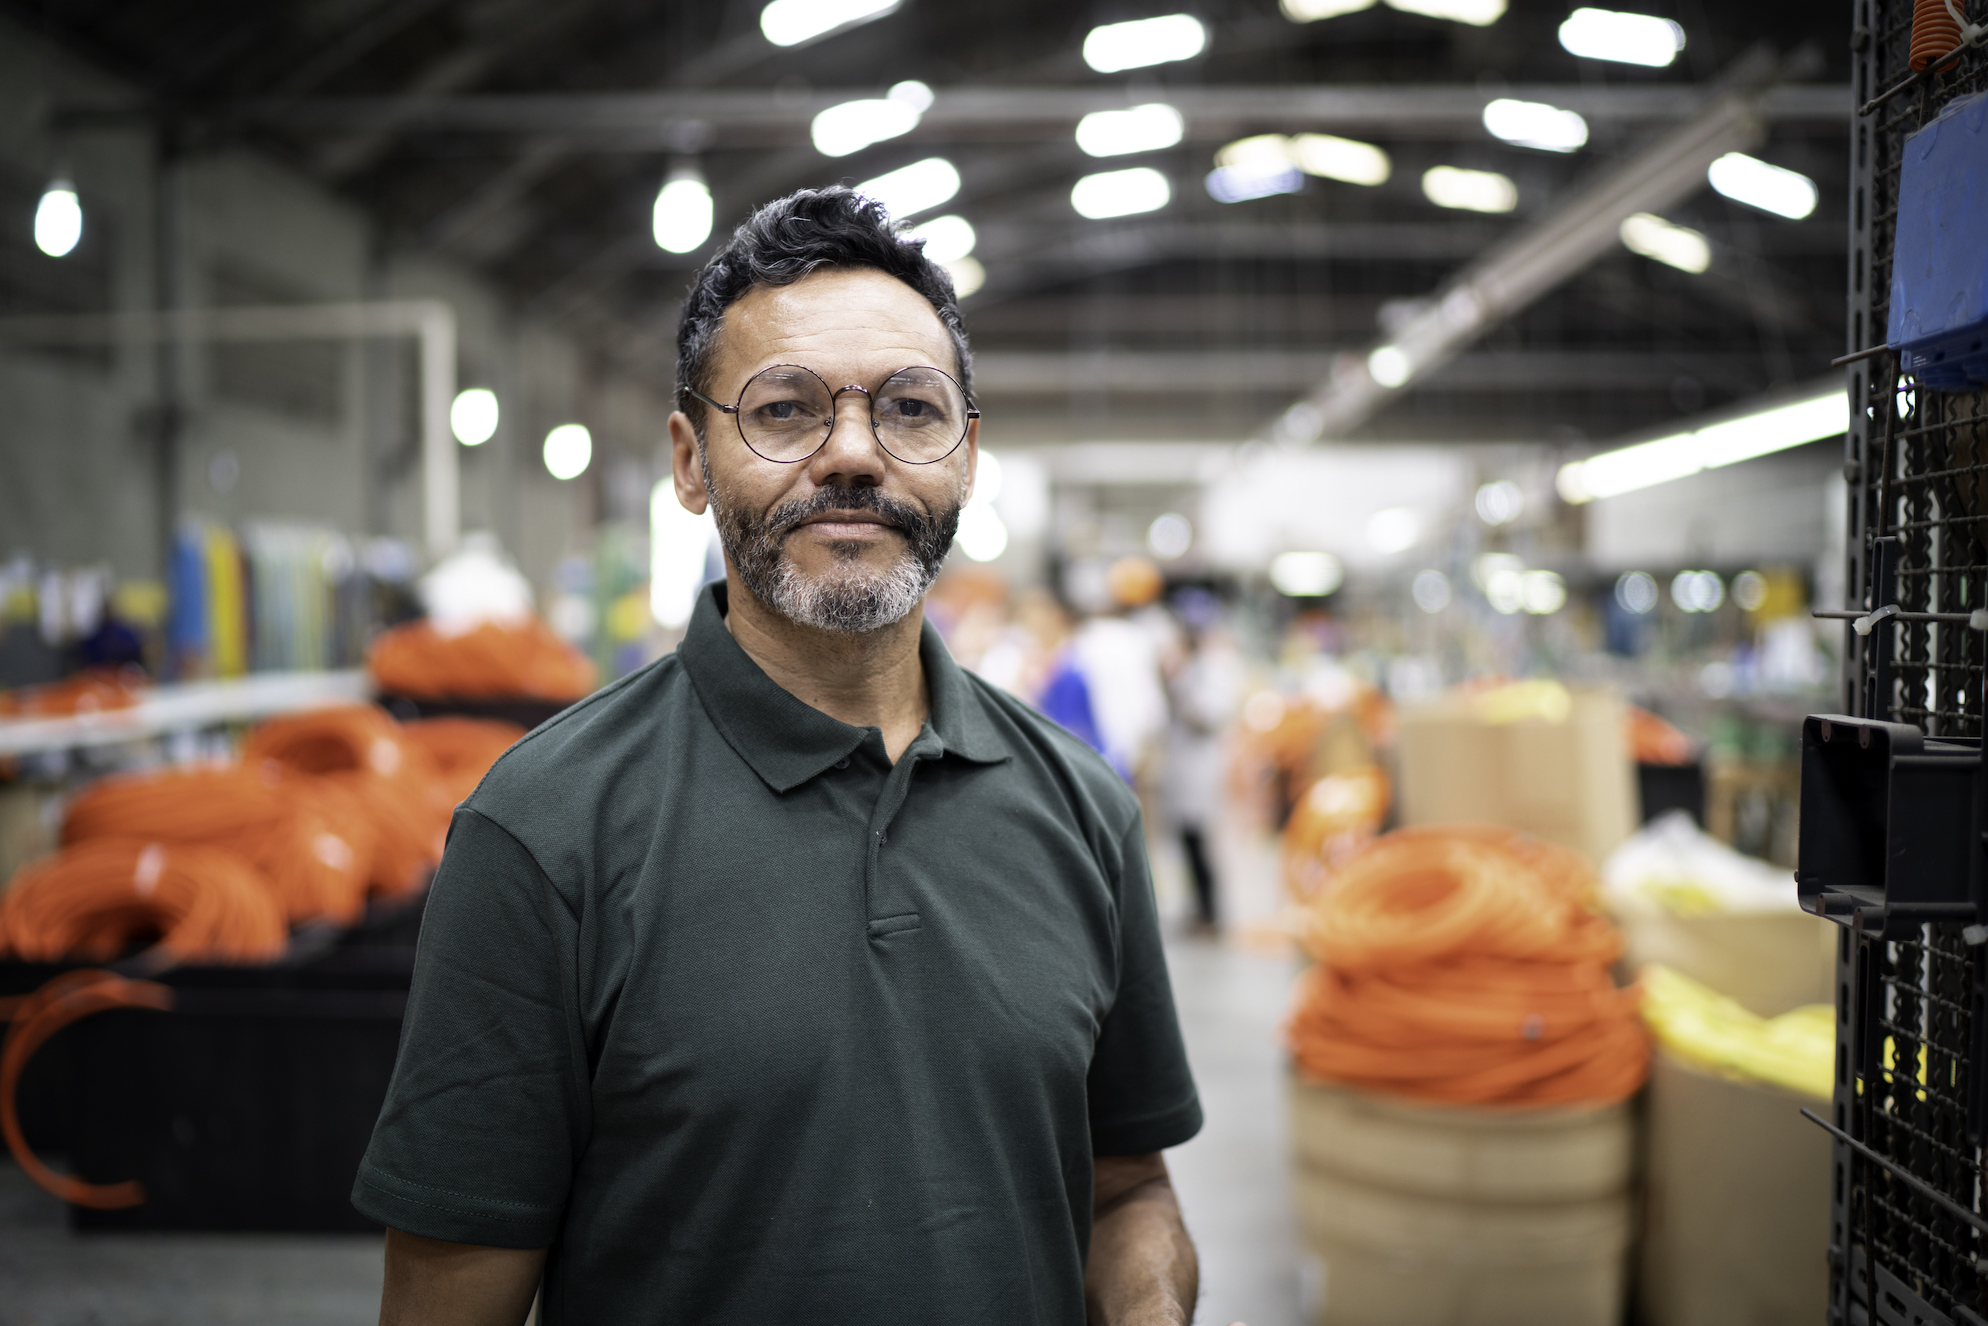 Man smiling in manufacturing setting